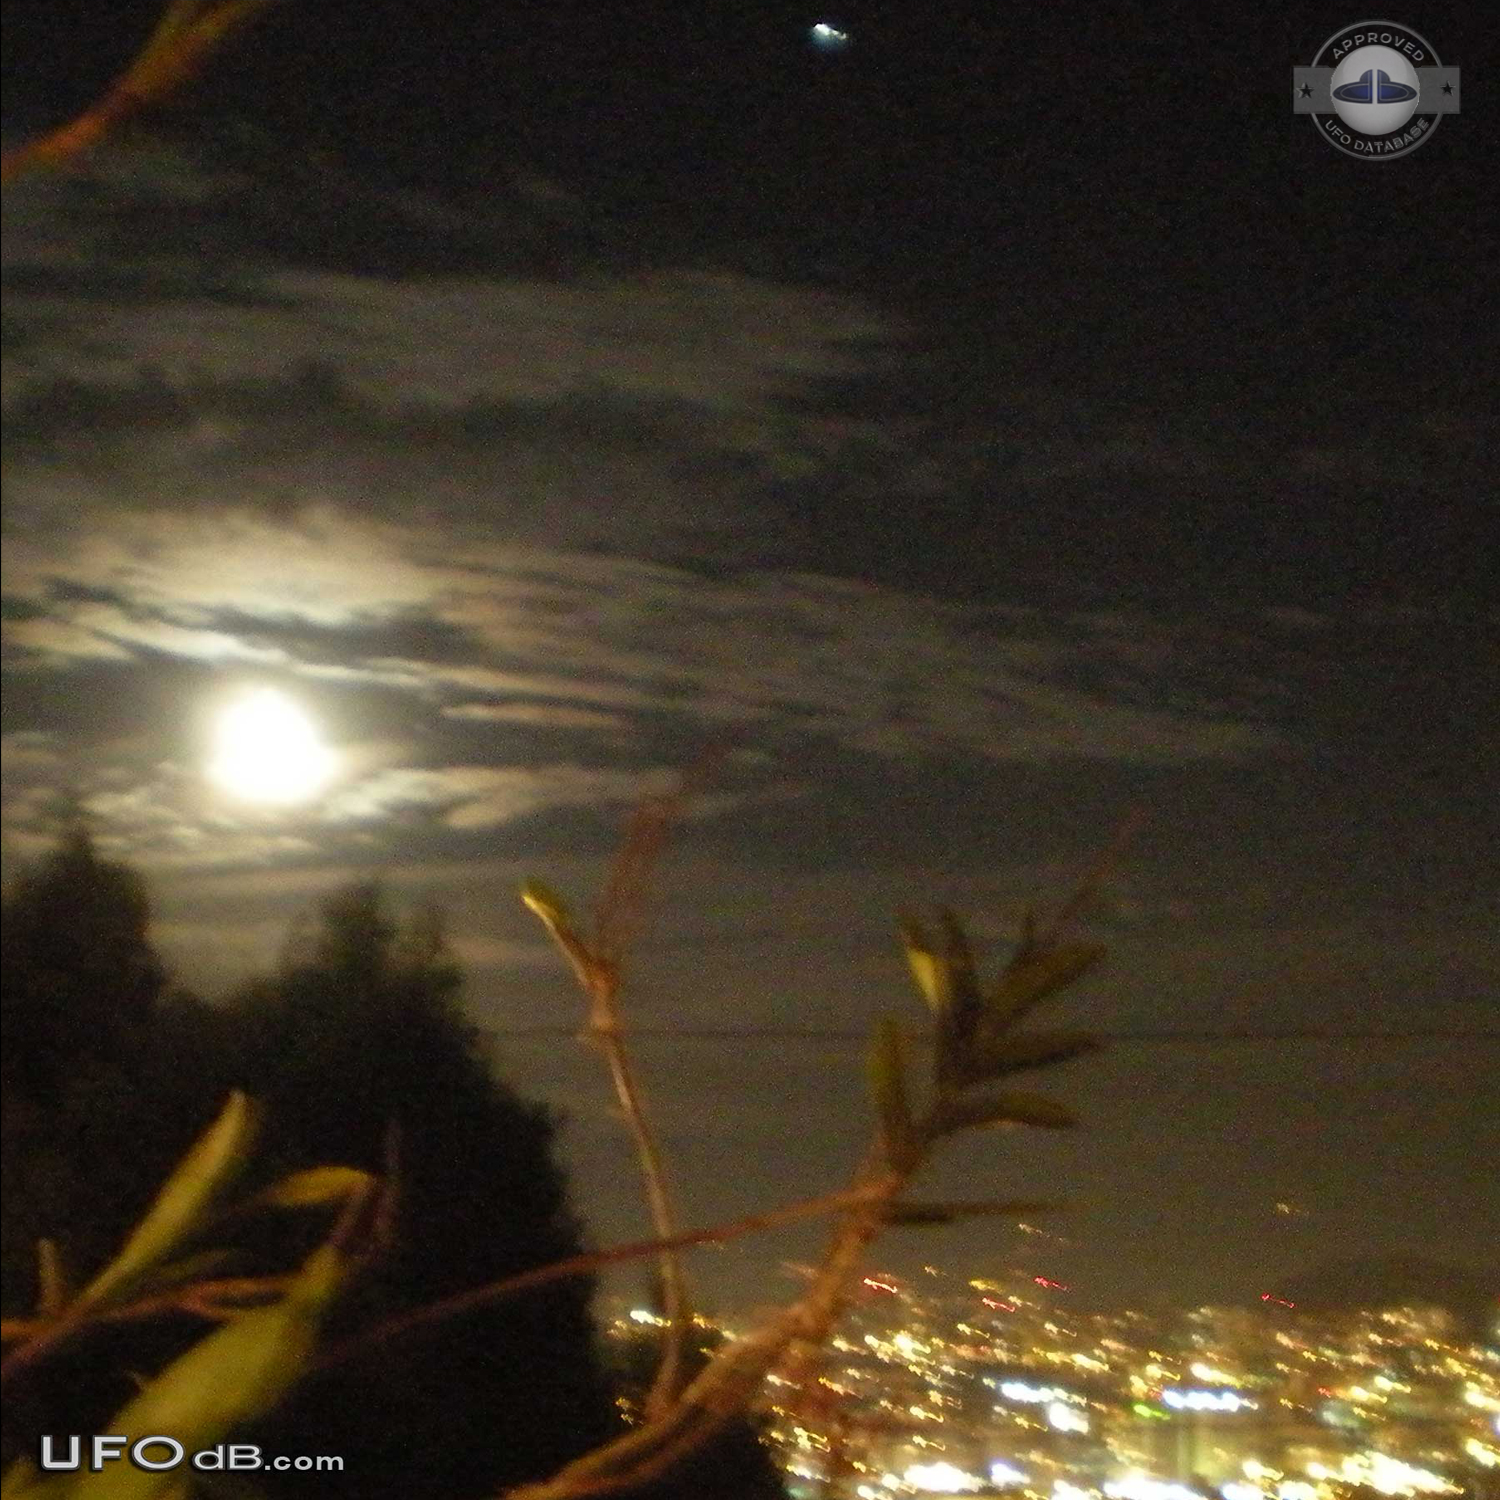 Moon picture reveals bright UFO in the night sky in Ecuador in 2009 UFO Picture #446-5